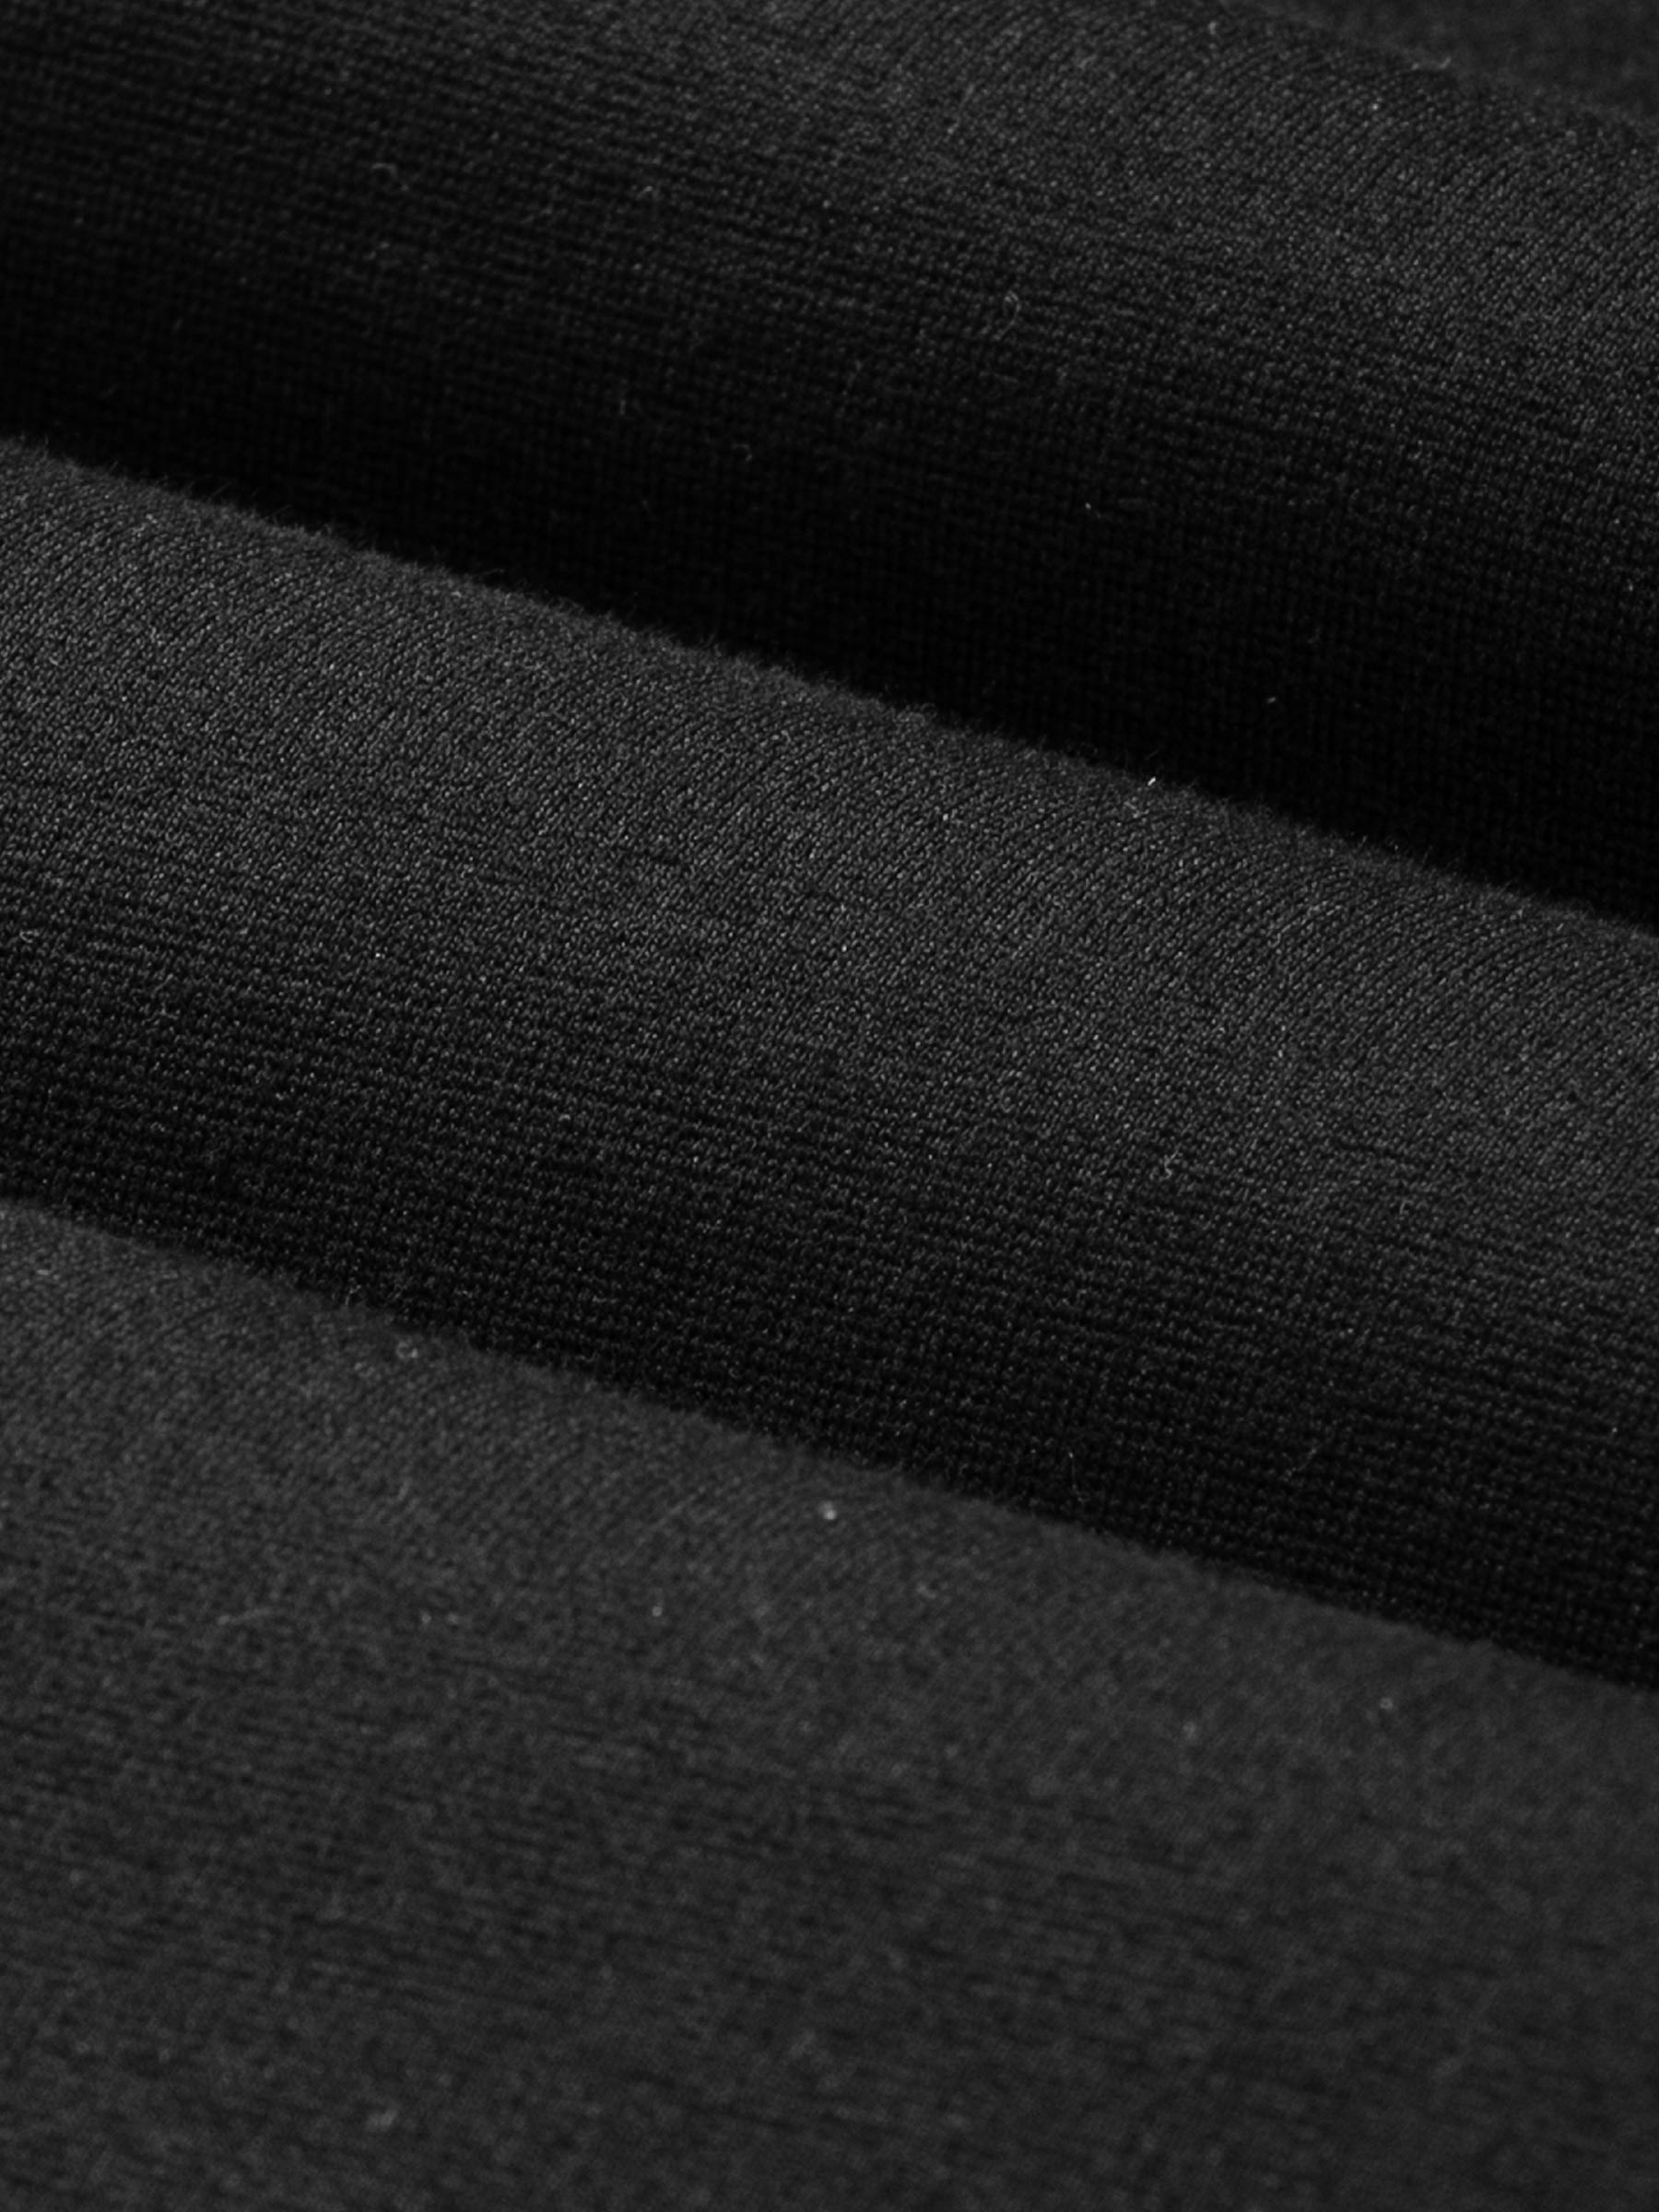 Sedona Round-Neck Grey Black Sweater 